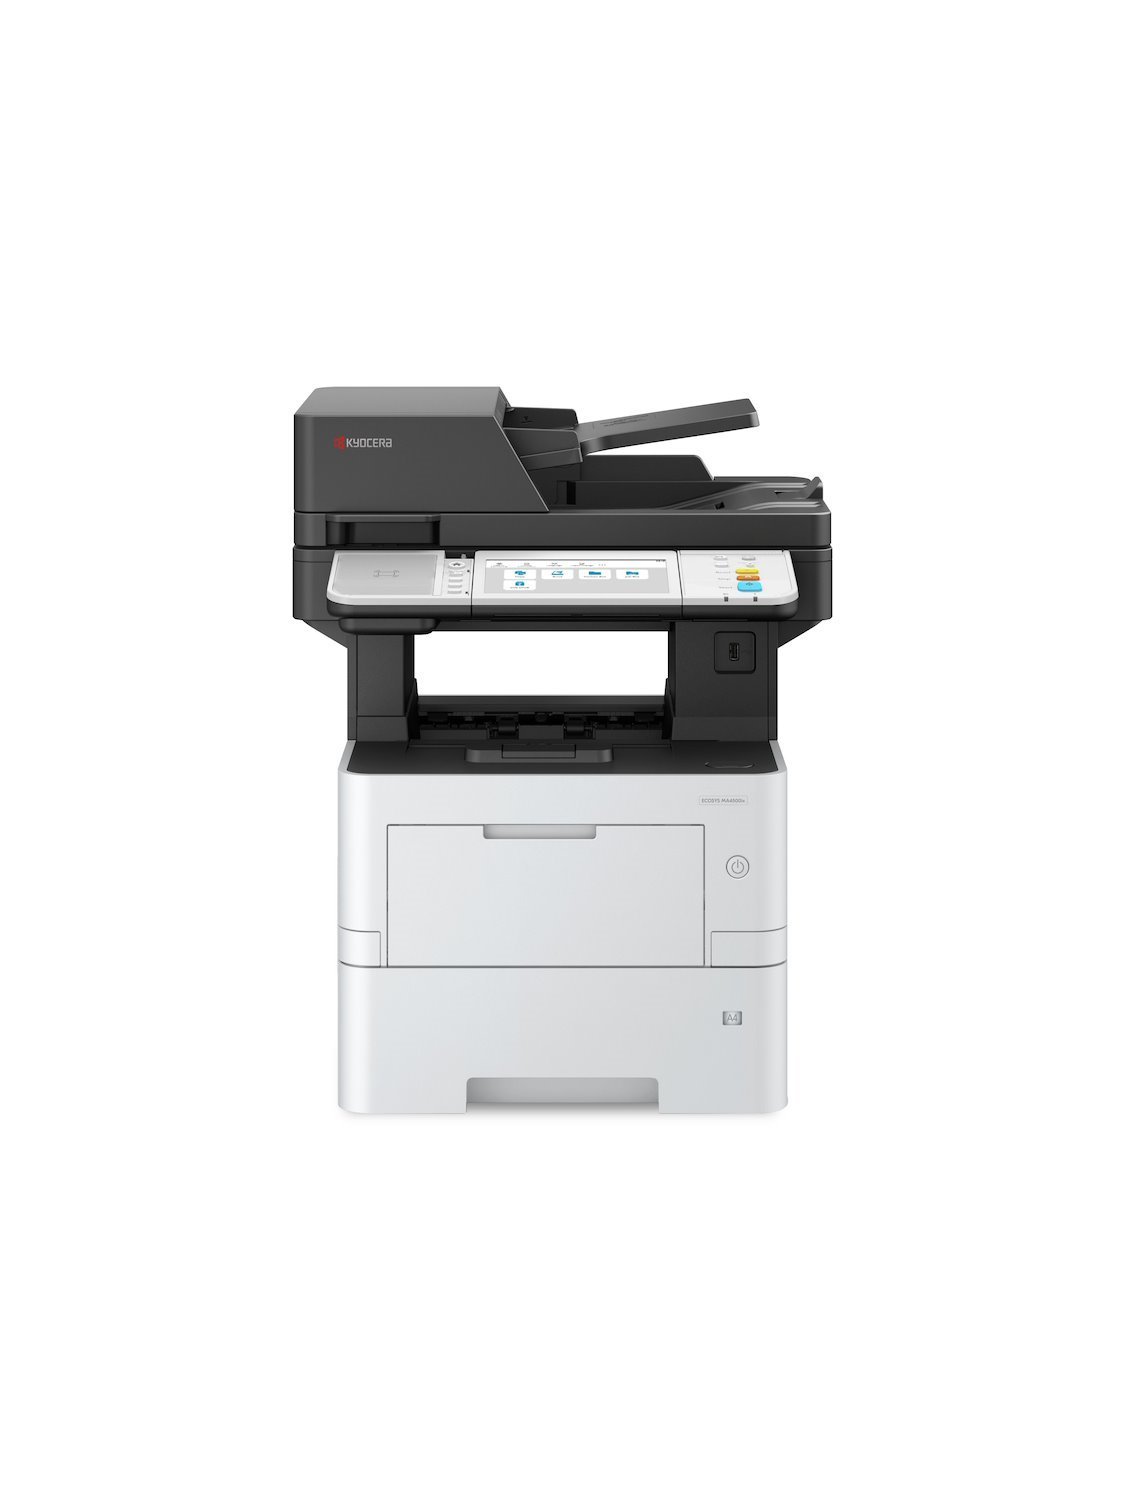 Kyocera Ecosys MA4500ix Laser Multifunction Printer - Monochrome - Black, White